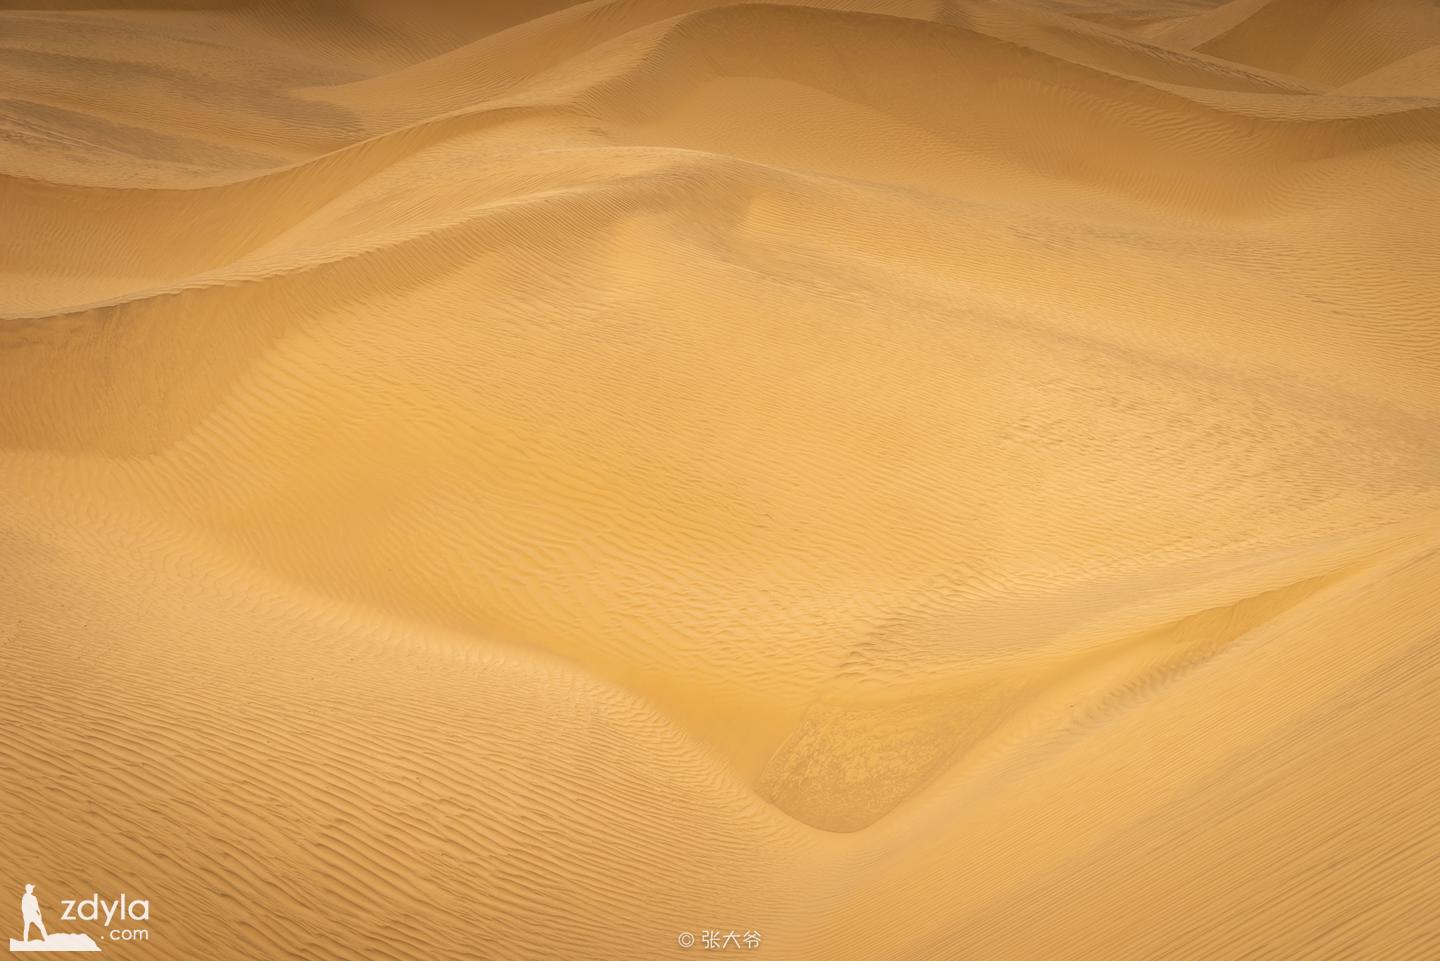 Sand body